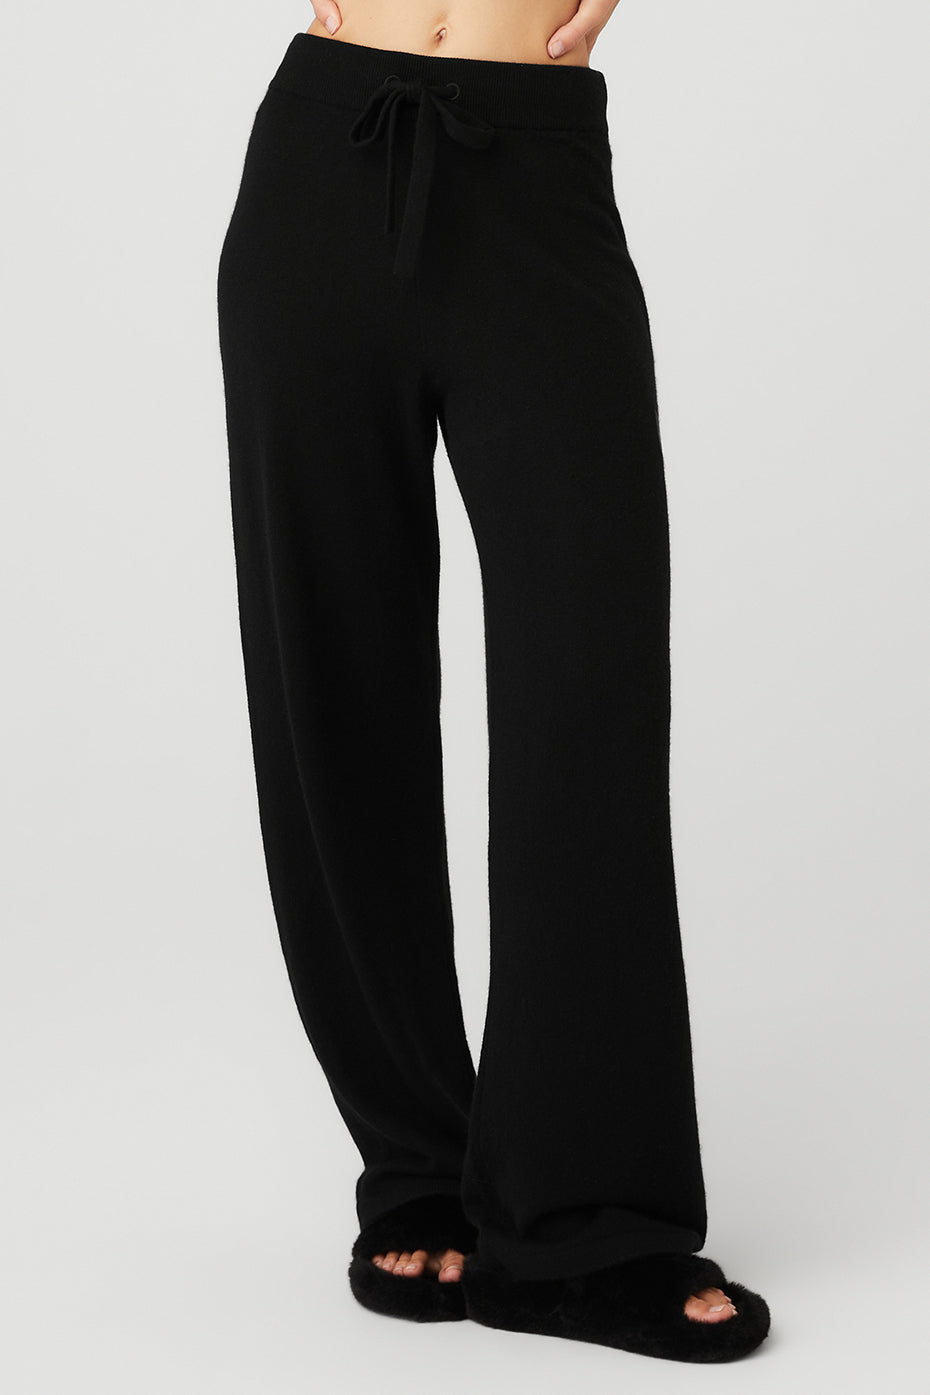 Alo Yoga Women's Muse Ribbed Sweatpants, Black,XS - US